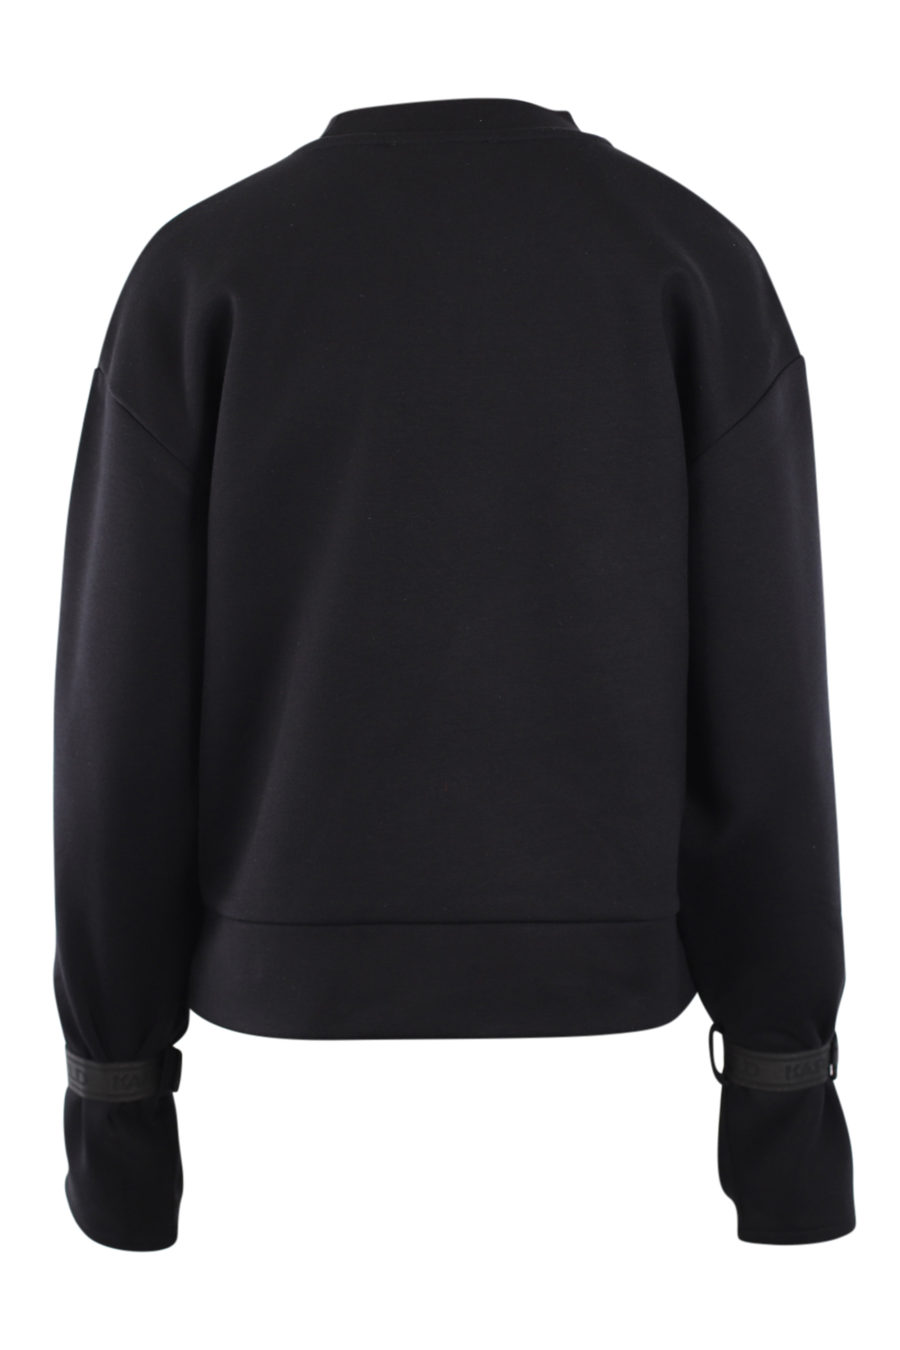 Black sweatshirt with black logo - IMG 0894